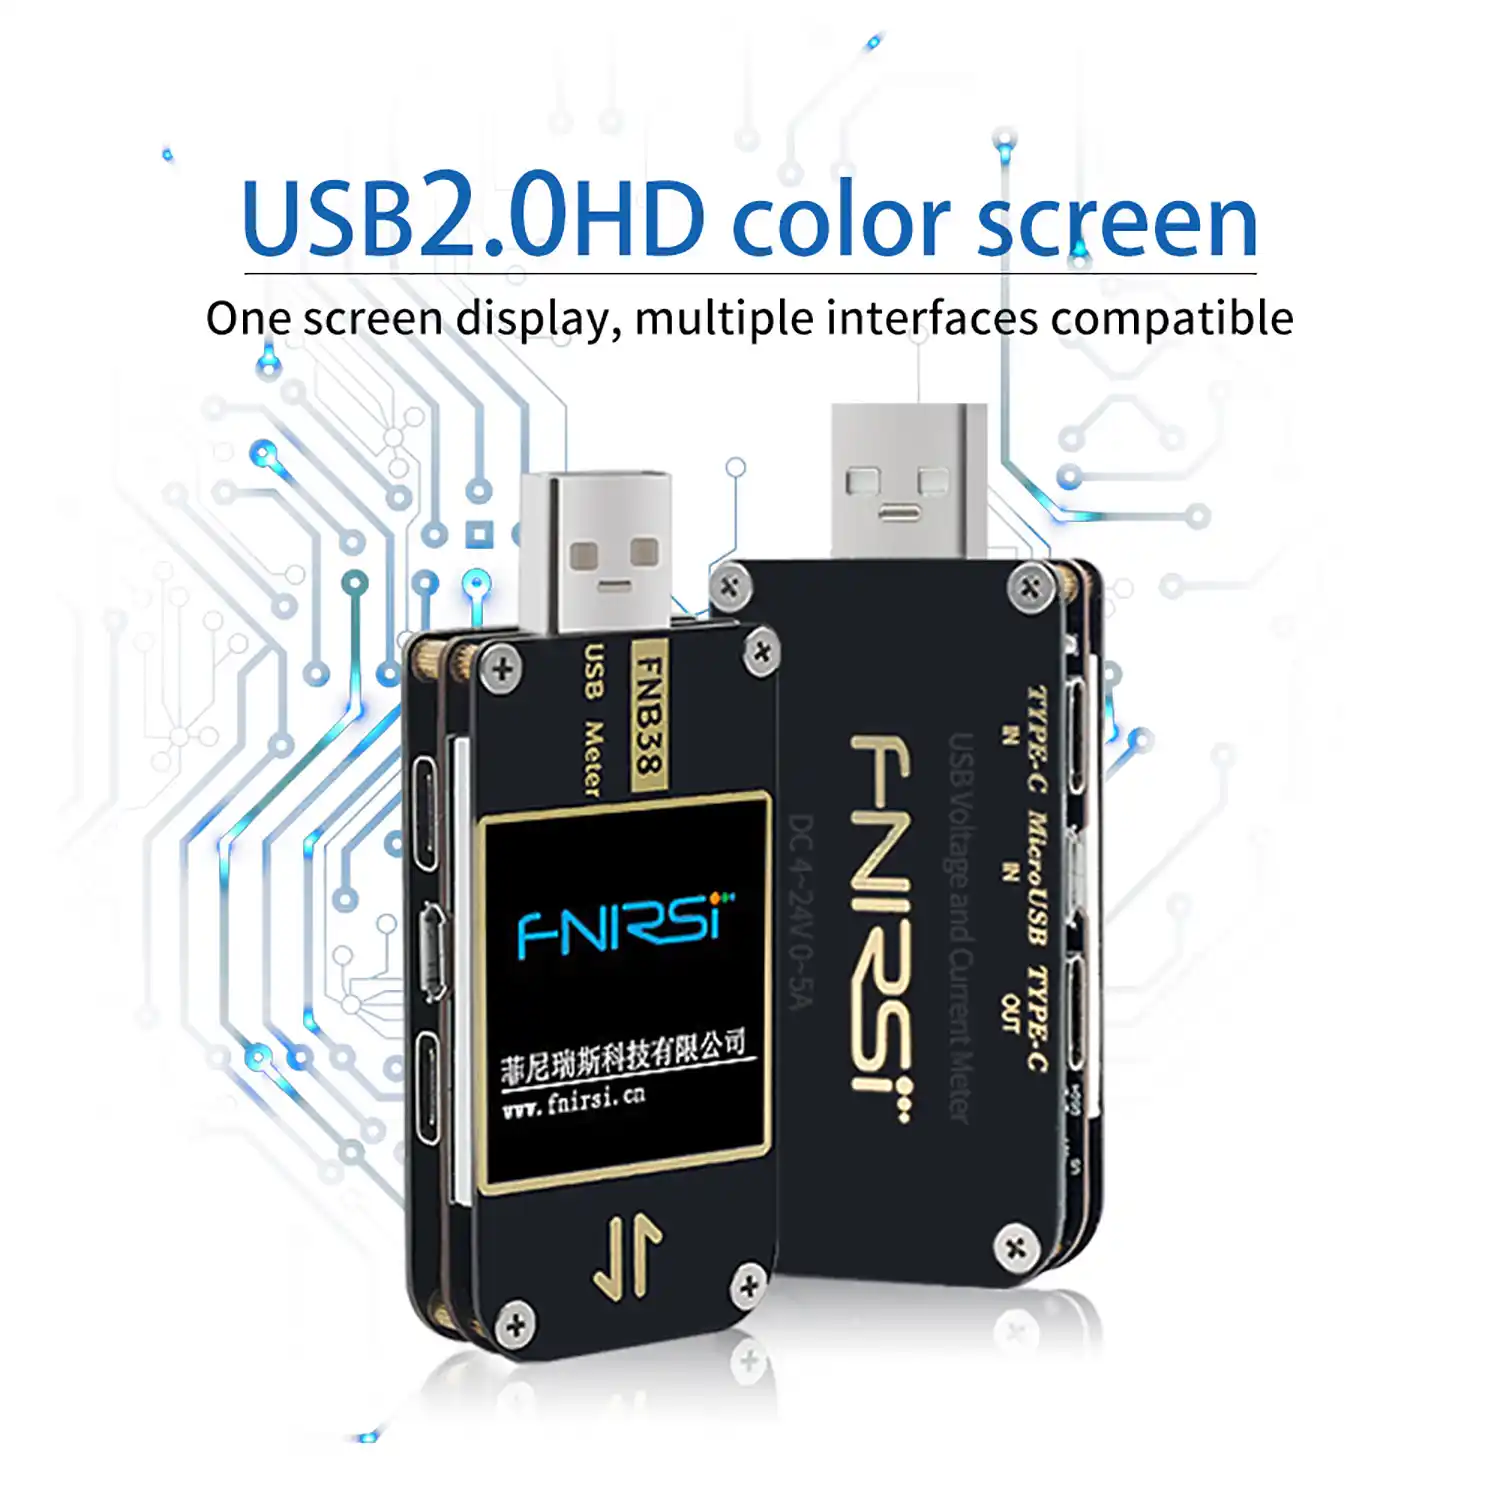 FNB38 HD LCD Stromspannungsmesser Volt Amp Gauge USB 2.0 Tester Schnellladung